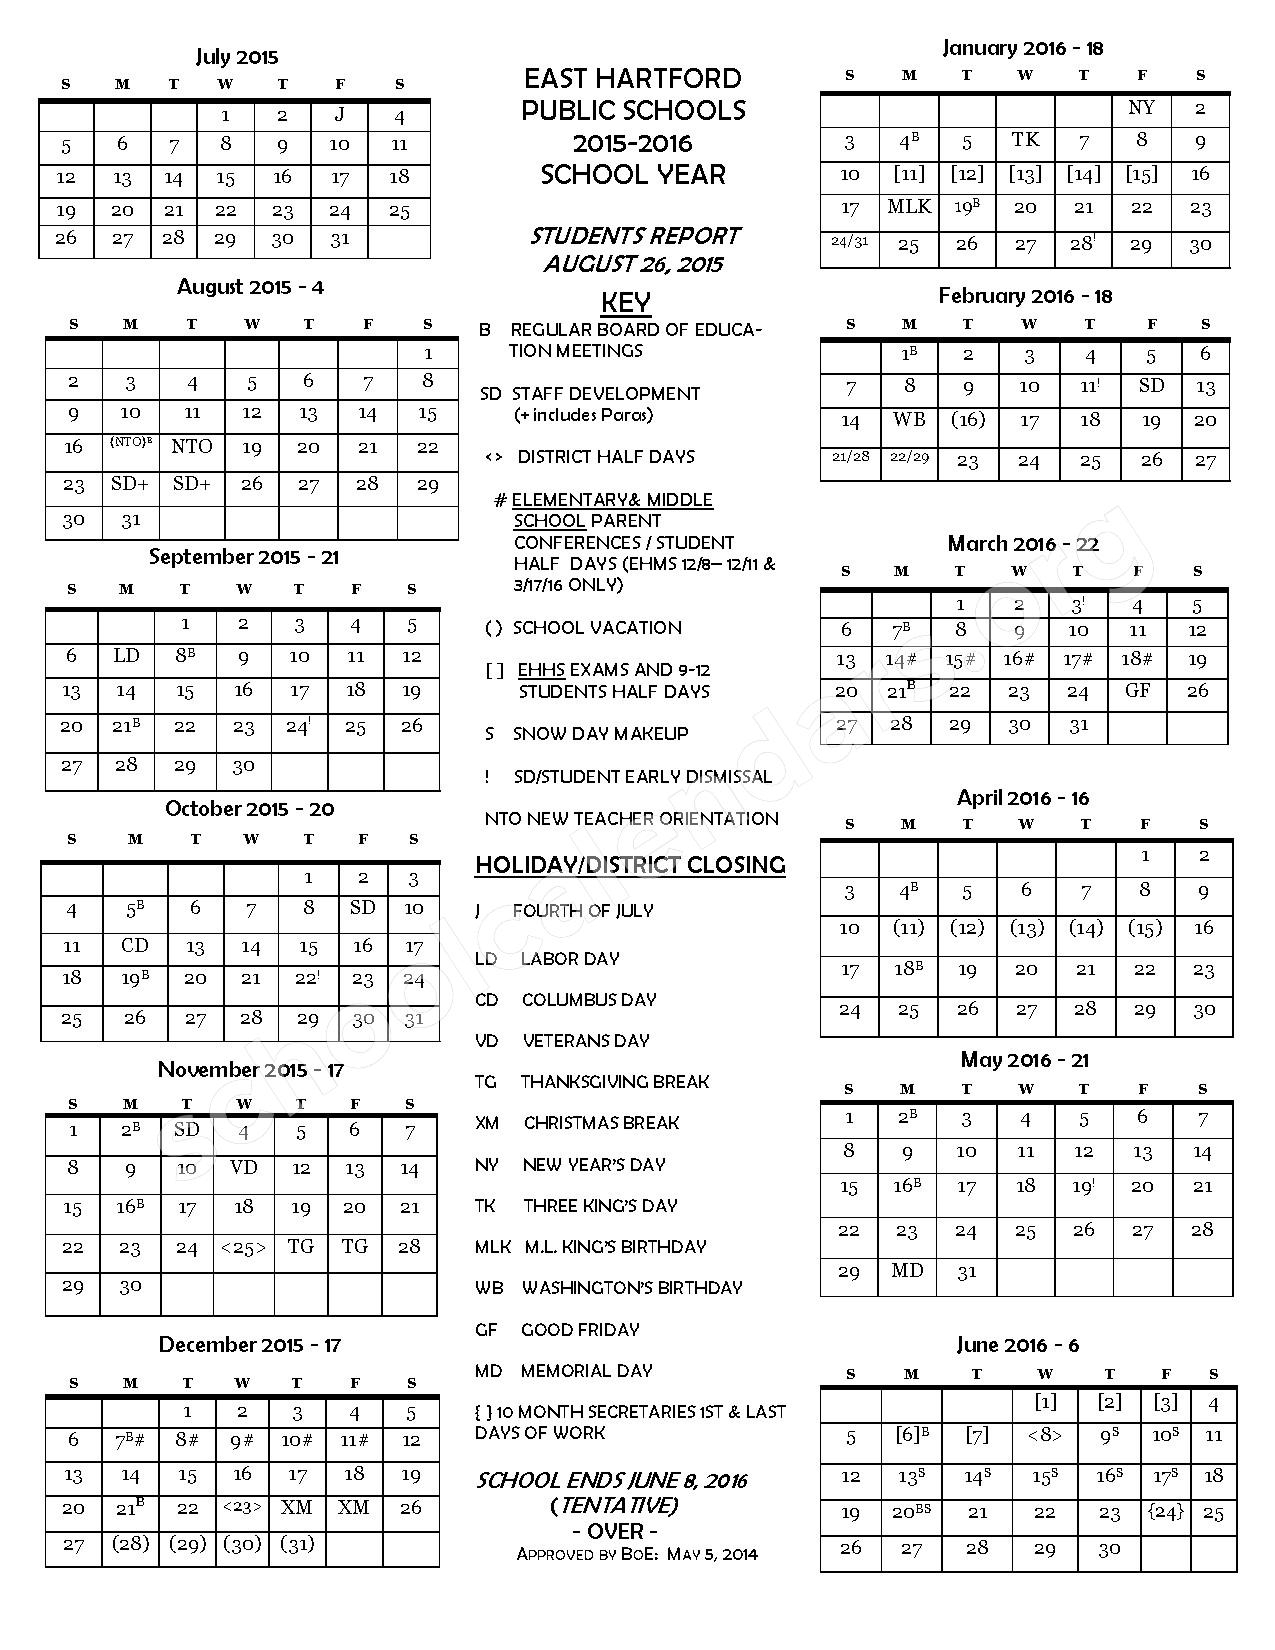 chesterfield-county-schools-calendar-2024-schoolcalendars